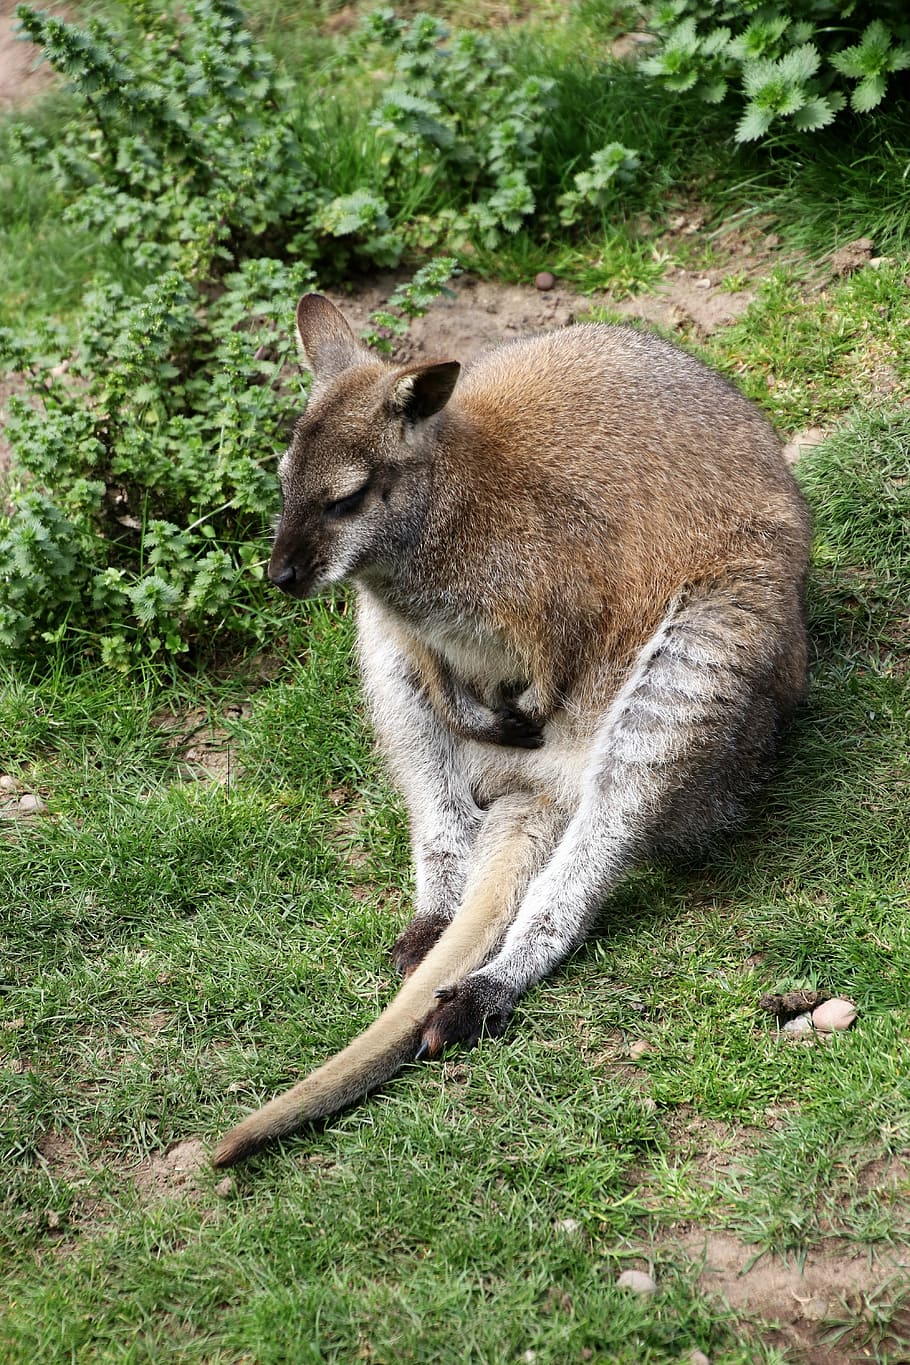 wallaby, kangaroo, animal, nature, australia, mammal, wildlife, pouch, aussie, outback